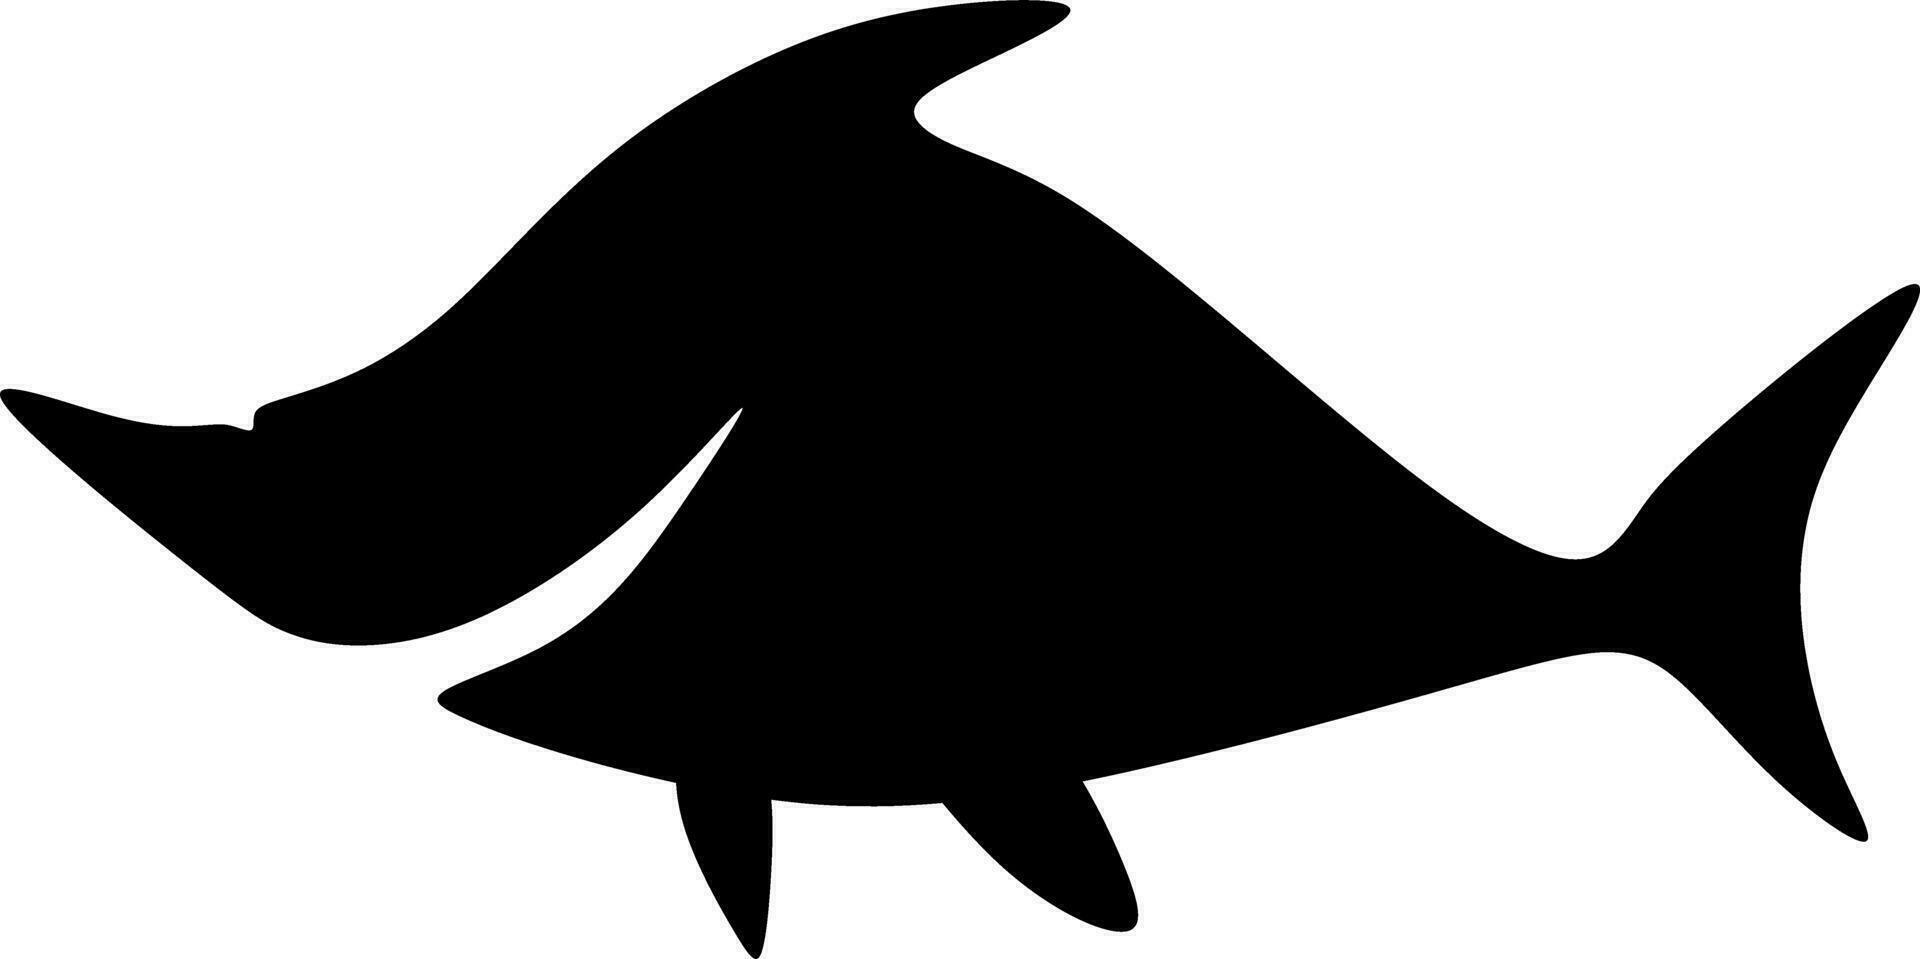 une silhouette de une requin vecteur